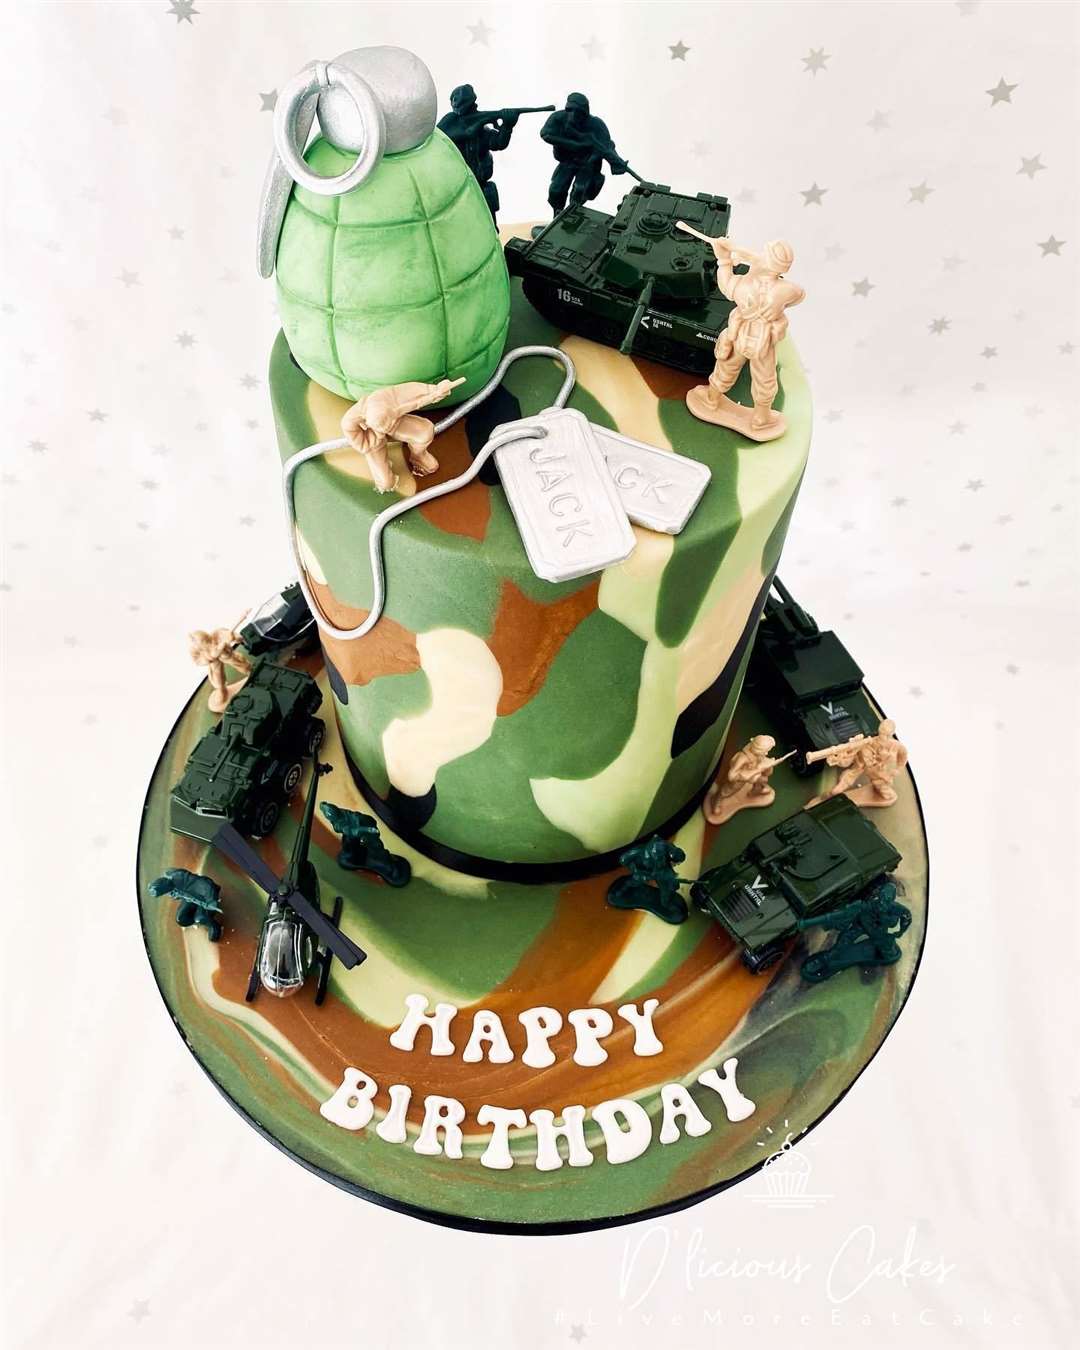 An army themed birthday cake